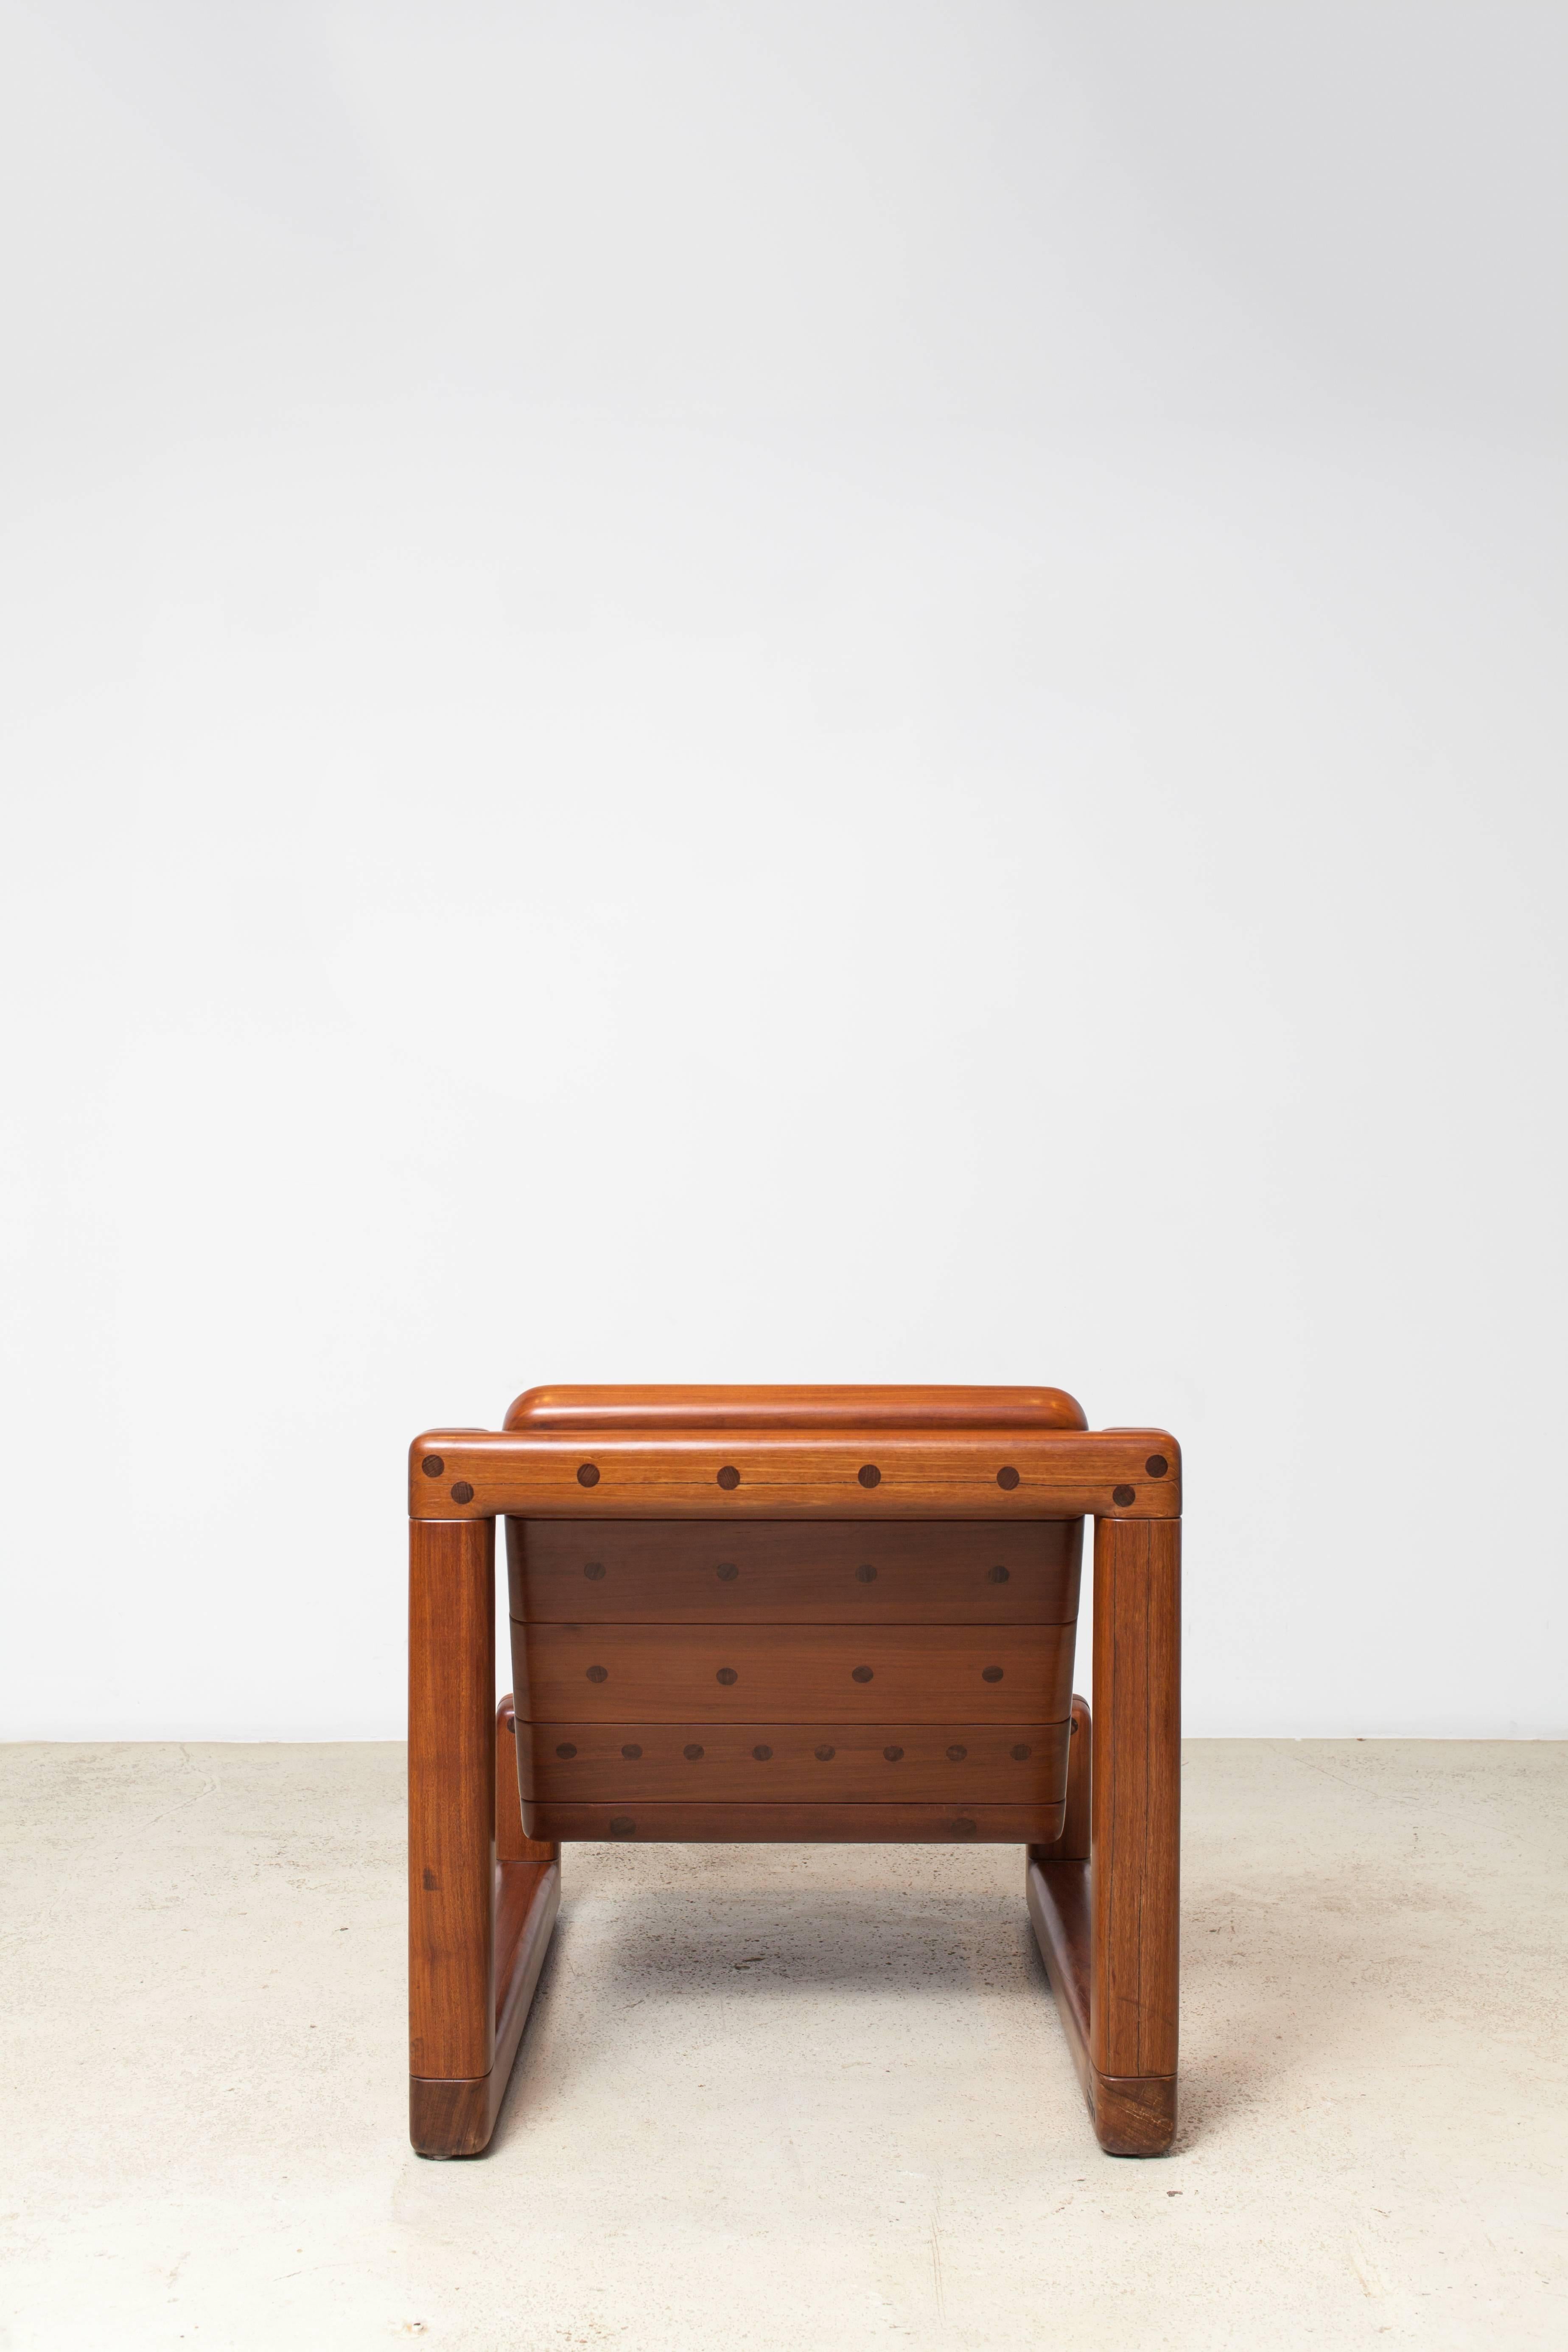 Brazilian Zanini de Zanine, Zino Chair, 2013, Limited Edition of 1 For Sale